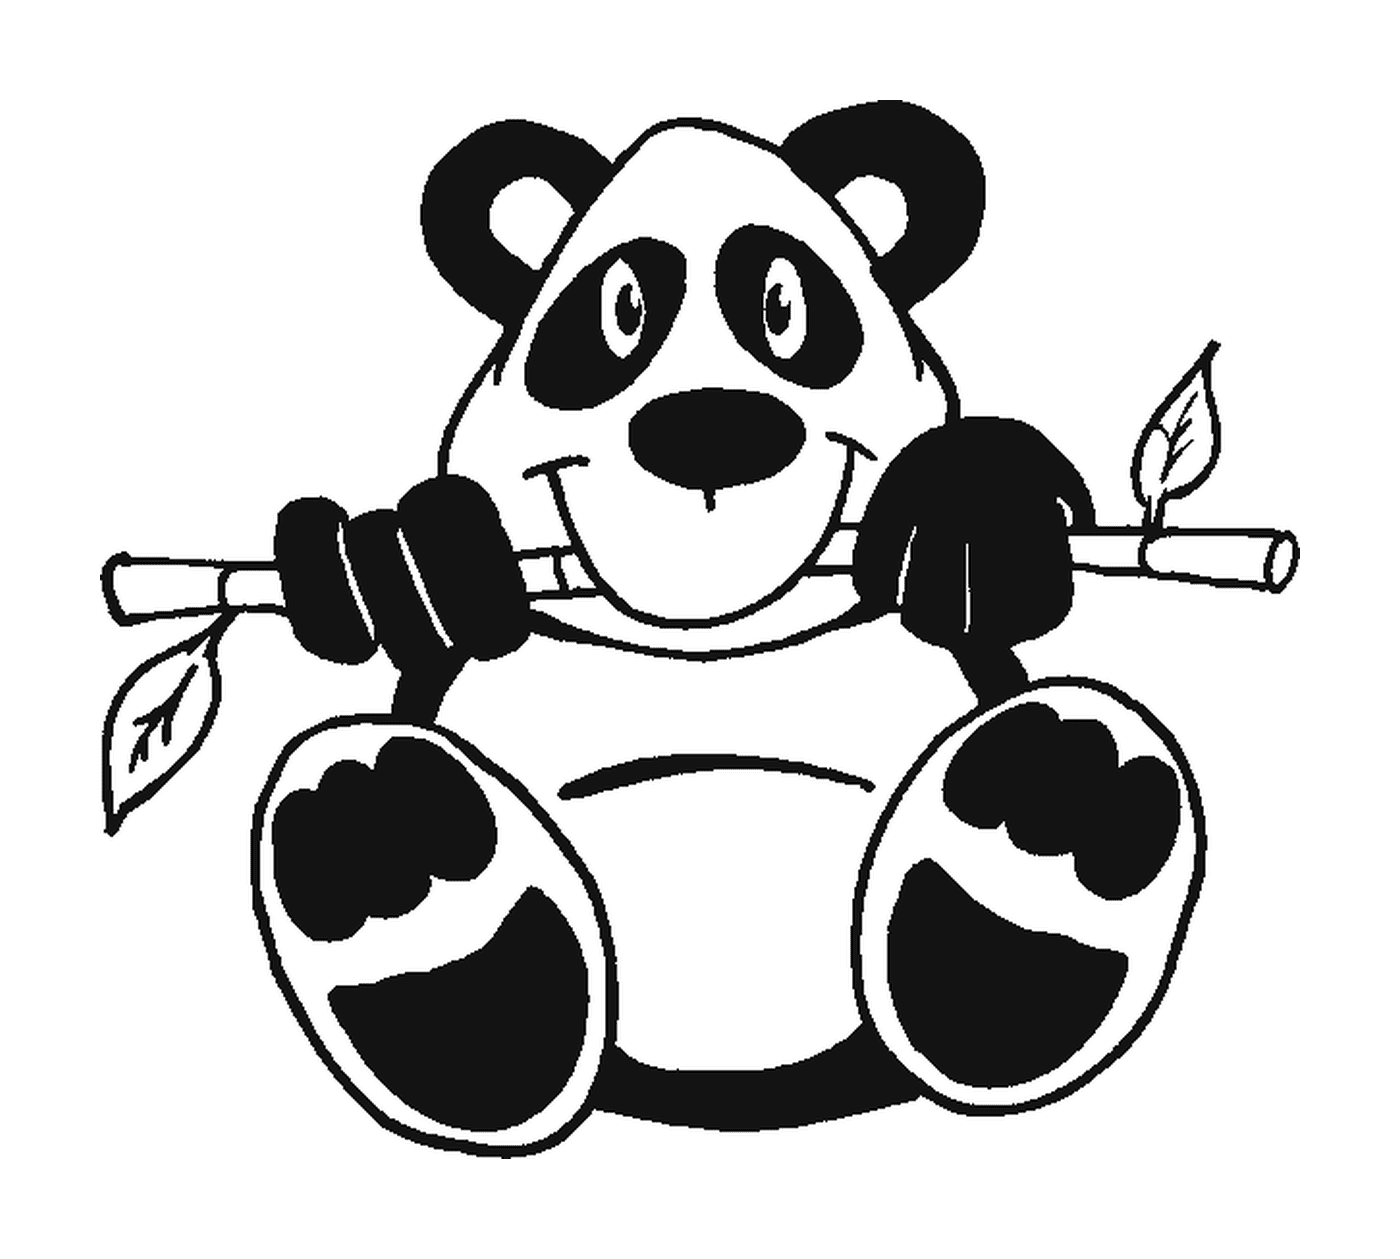  panda encaramado rama superior 